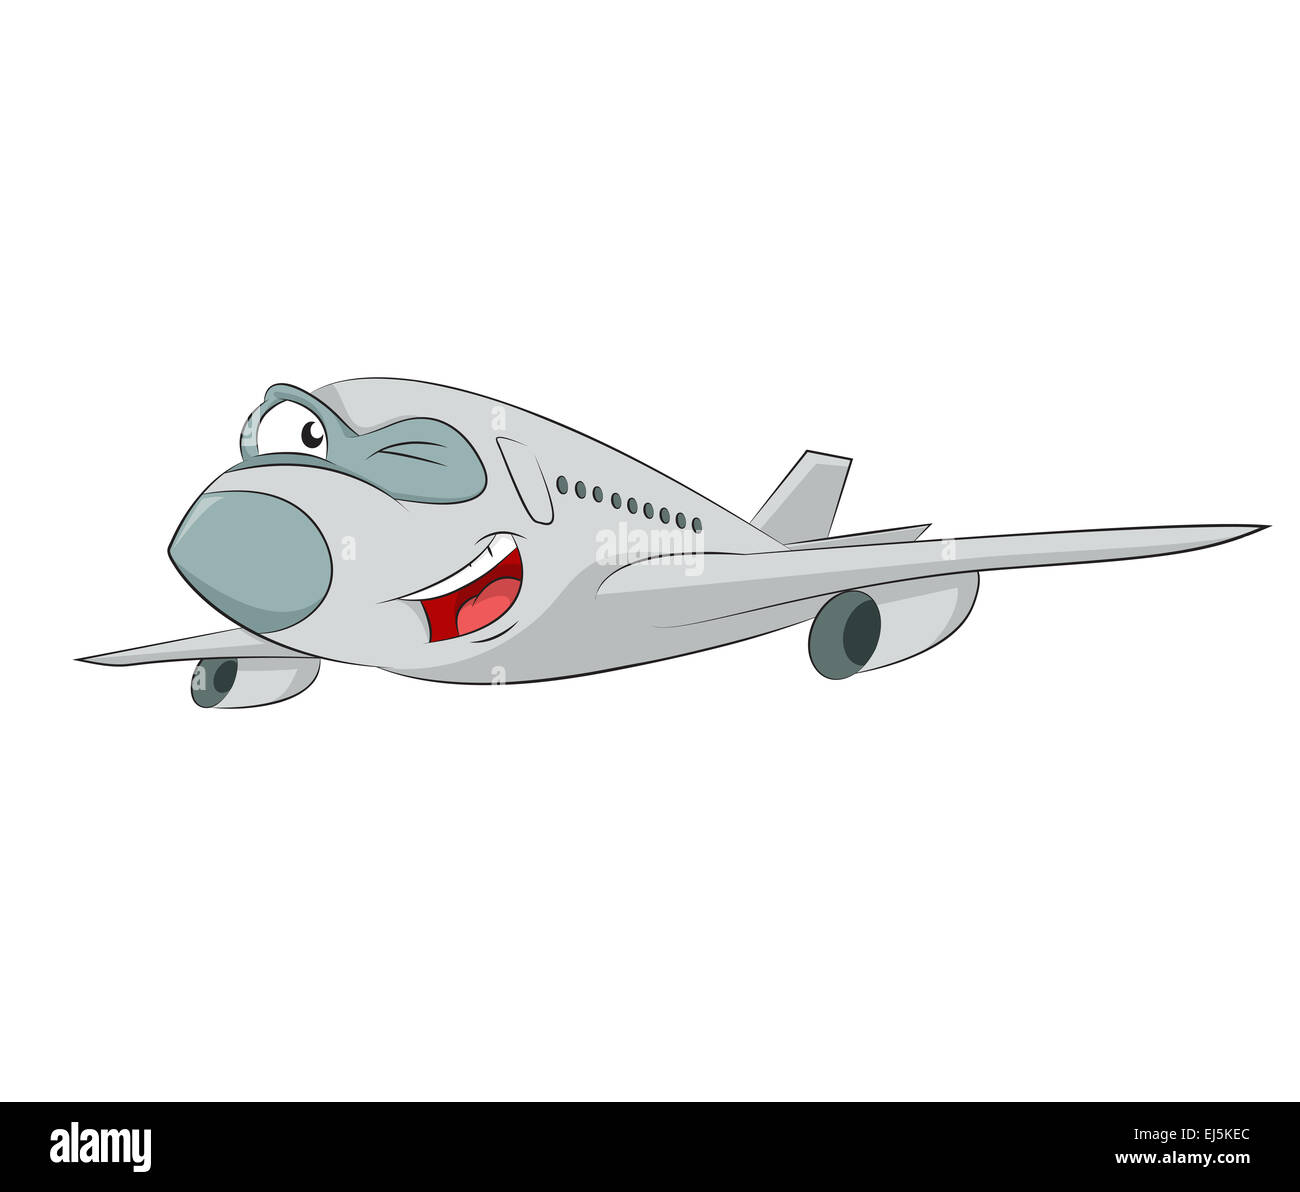 Vector image of funny cartoon smiling plane Stock Photo - Alamy